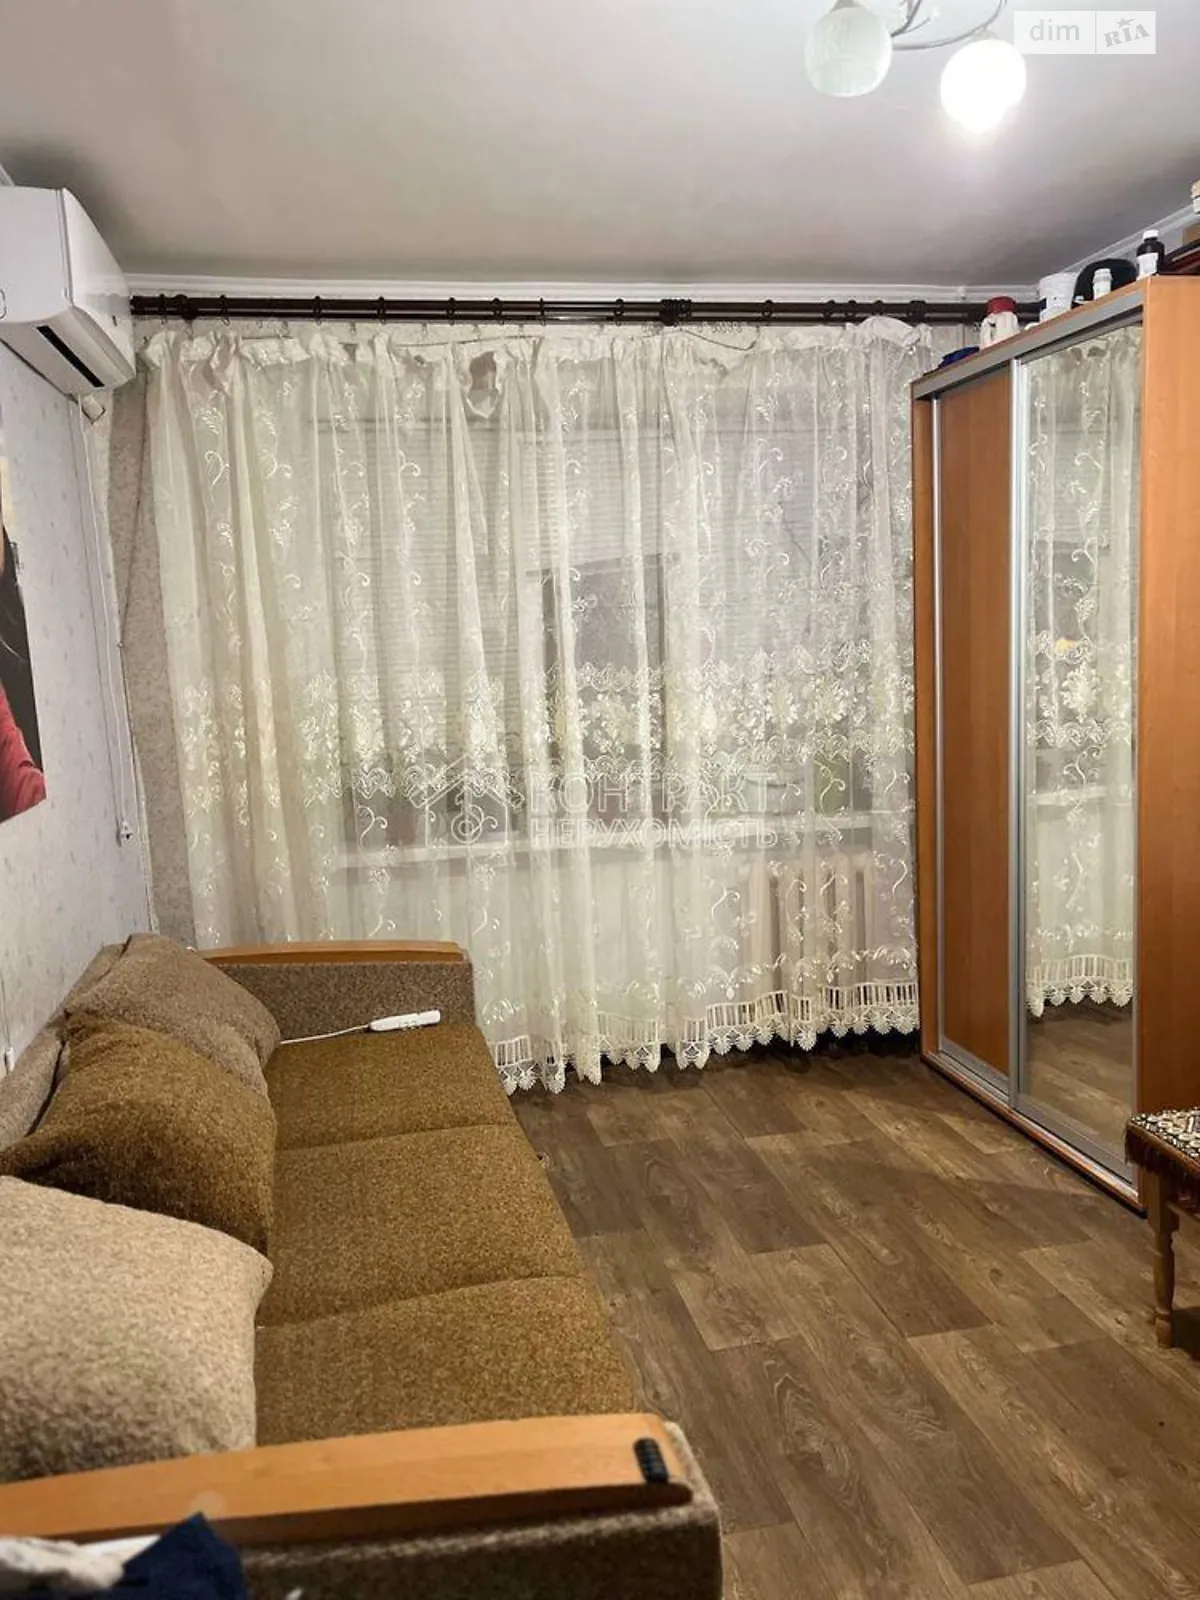 Продается комната 12 кв. м в Харькове - фото 2